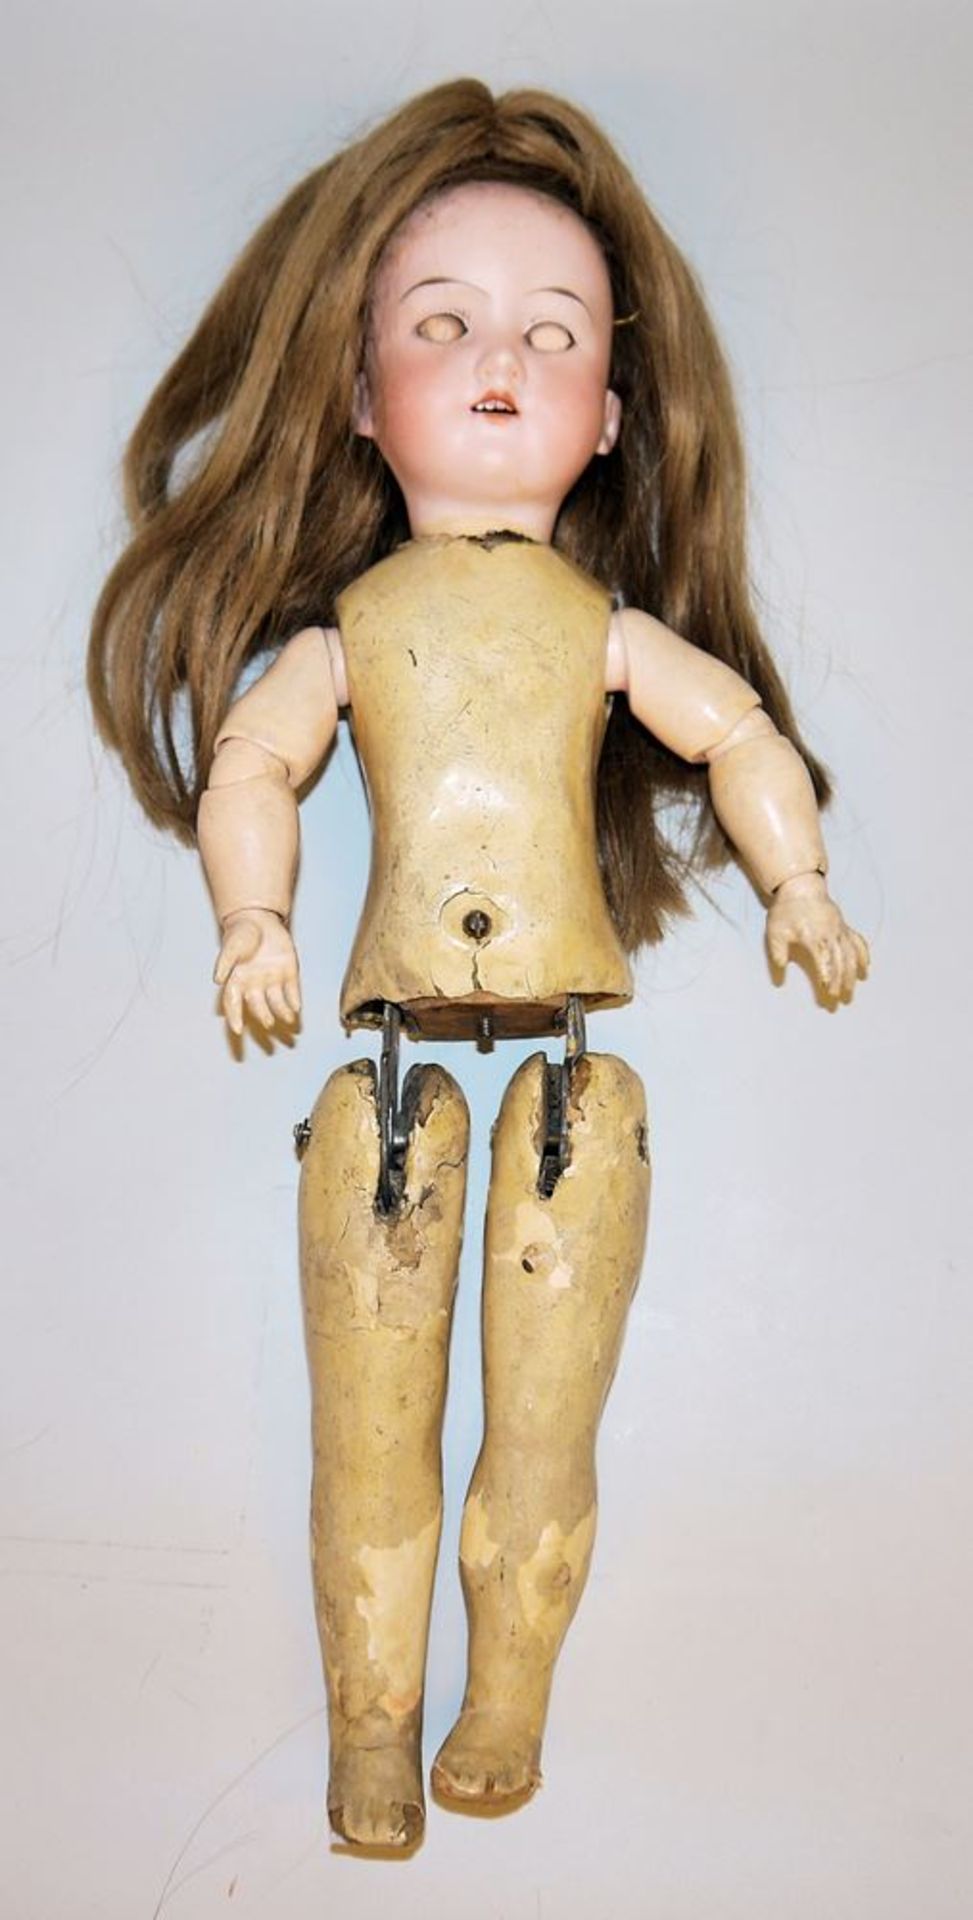 Porcelain head doll Armand Marseille circa 1920/30 - Image 2 of 3